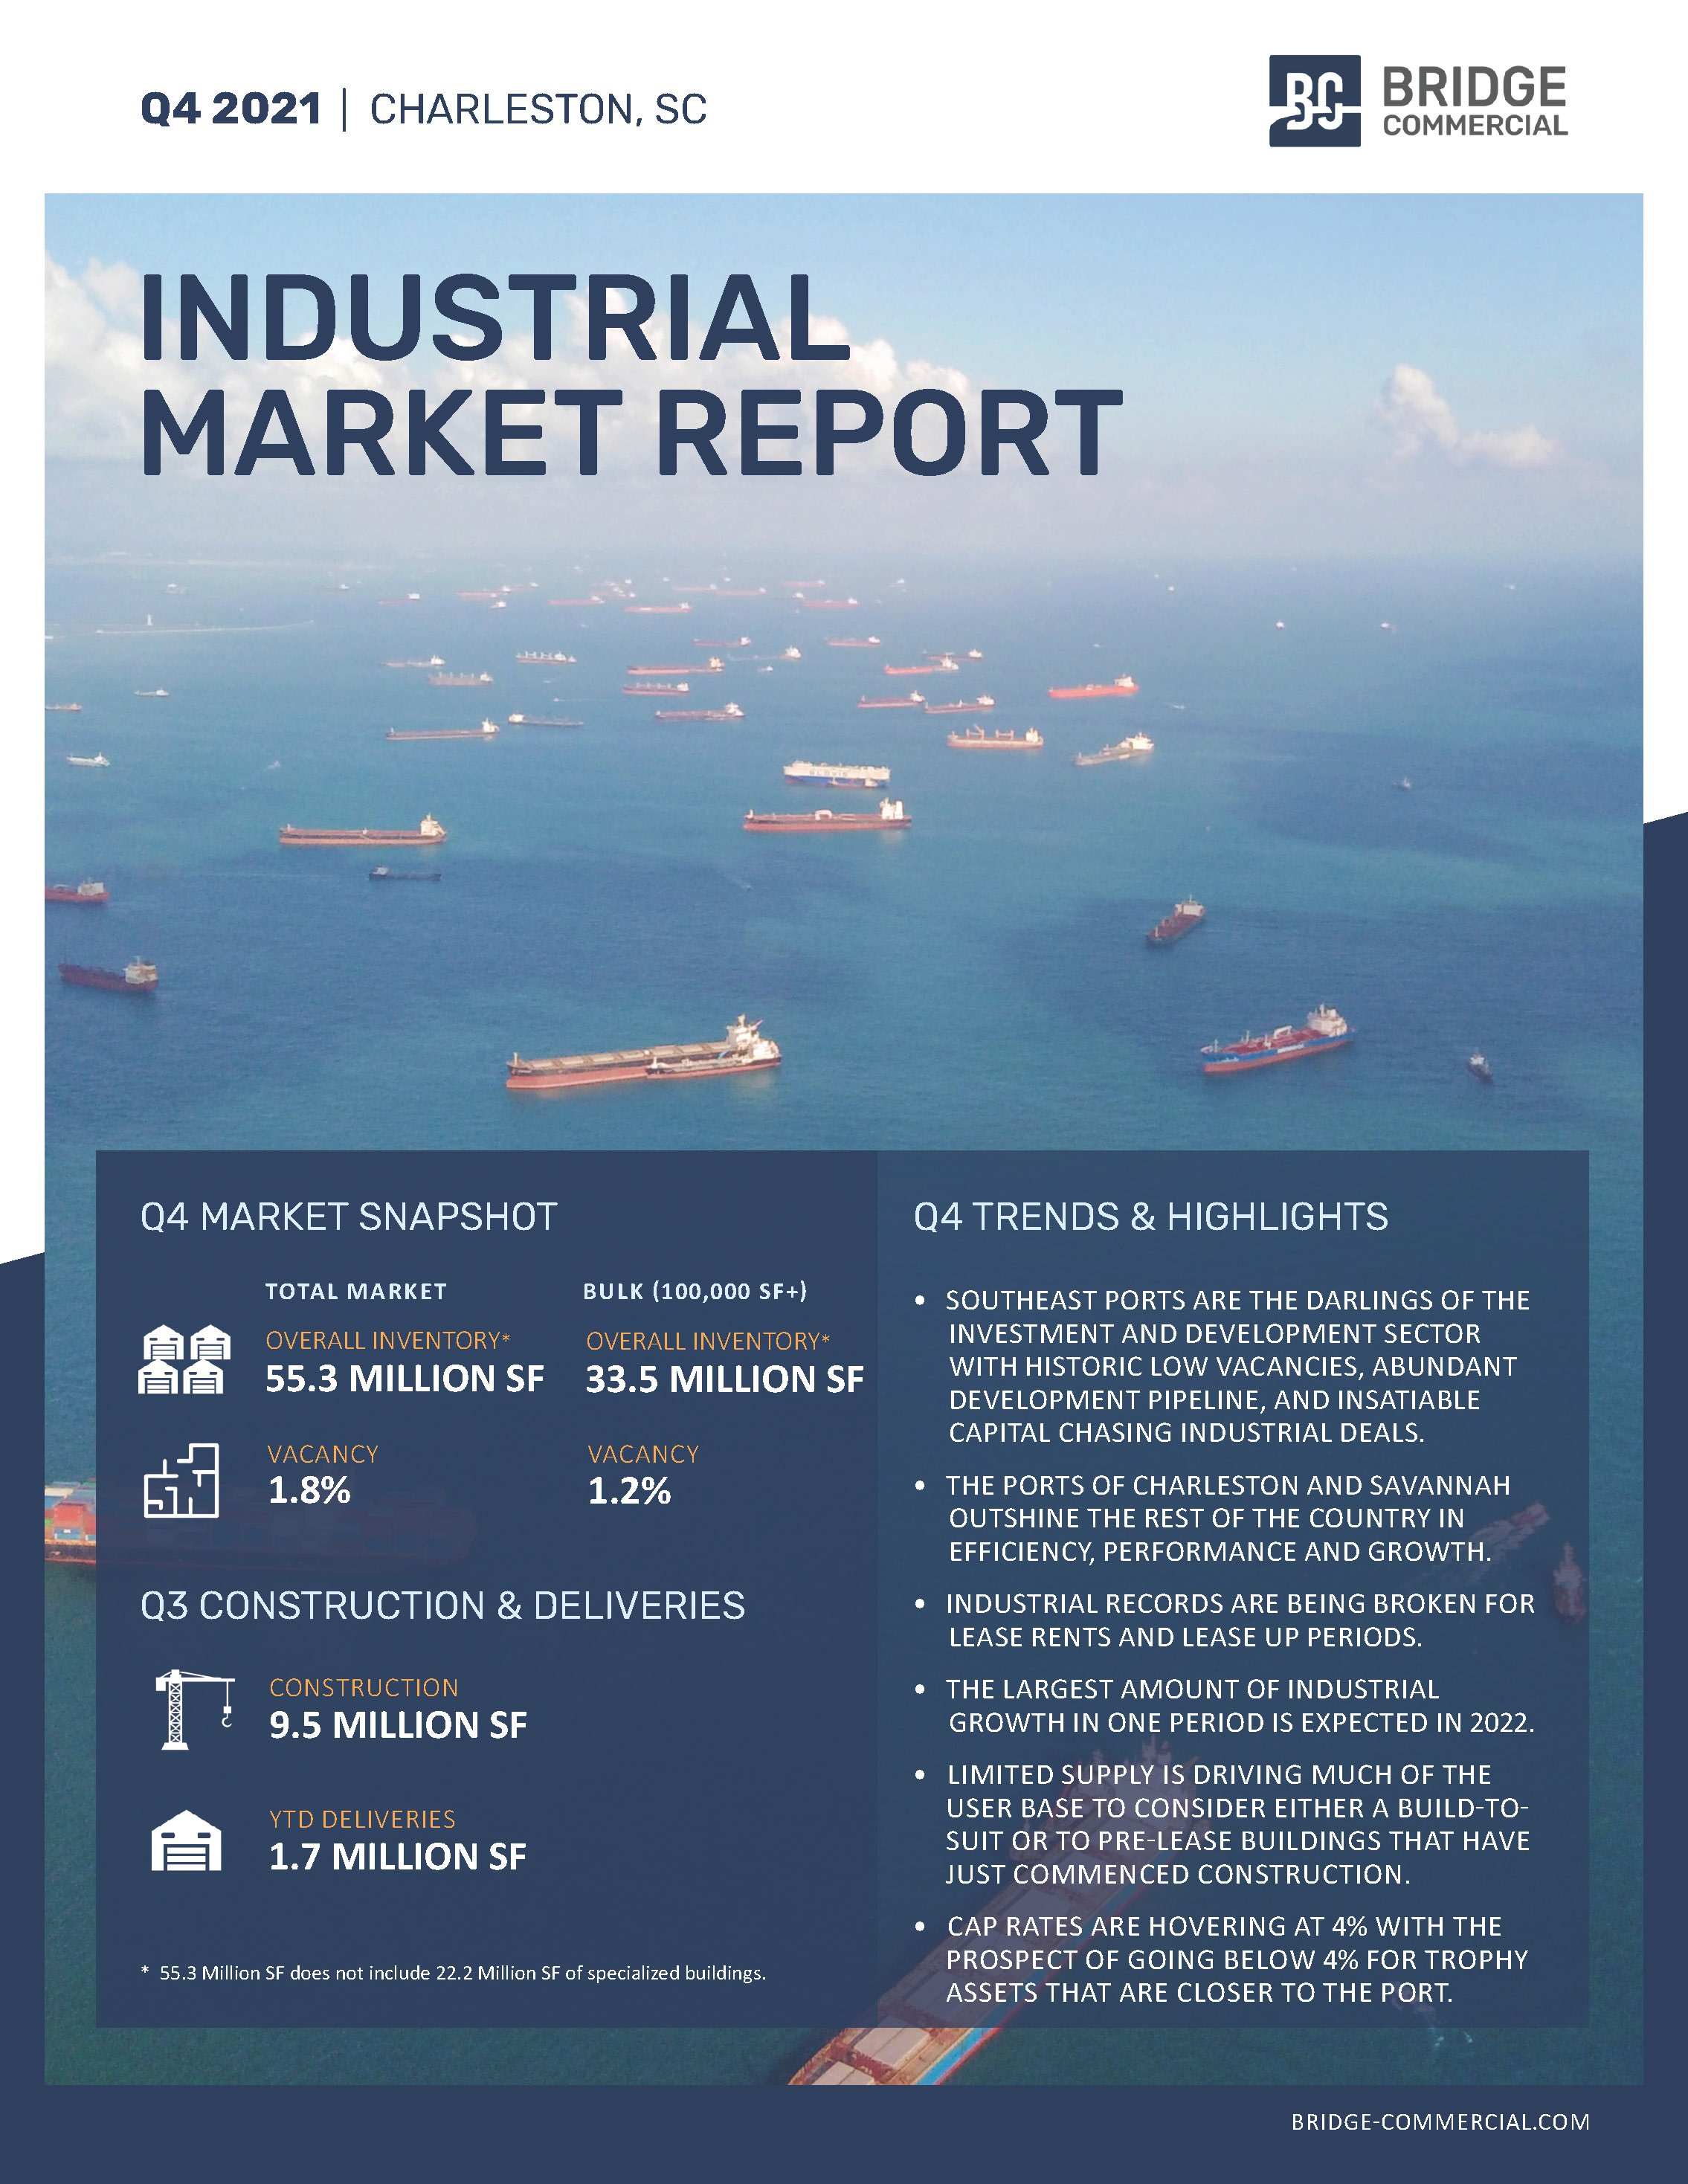 Q4 2021 Charleston Industrial Market Report_Bridge Commercial_Page_1.jpg